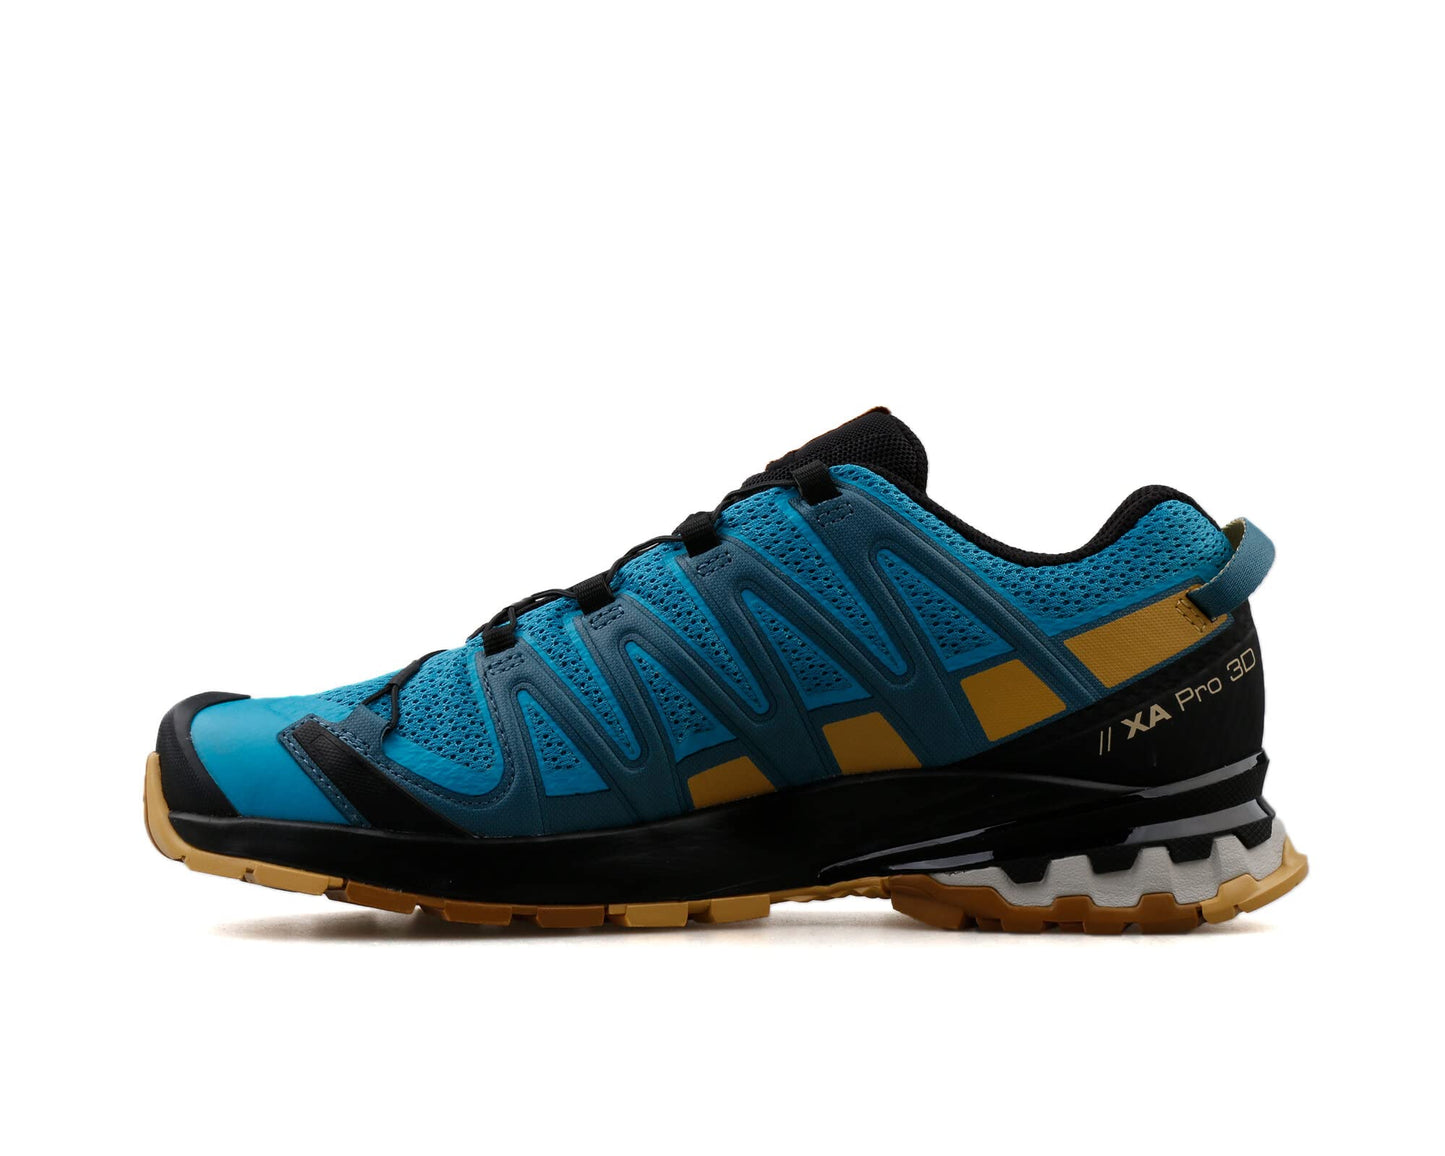 Salomon Xa Pro 3D V8 Trail Running Shoes for Men, Barrier Reef/Fall Leaf/Bronze Brown